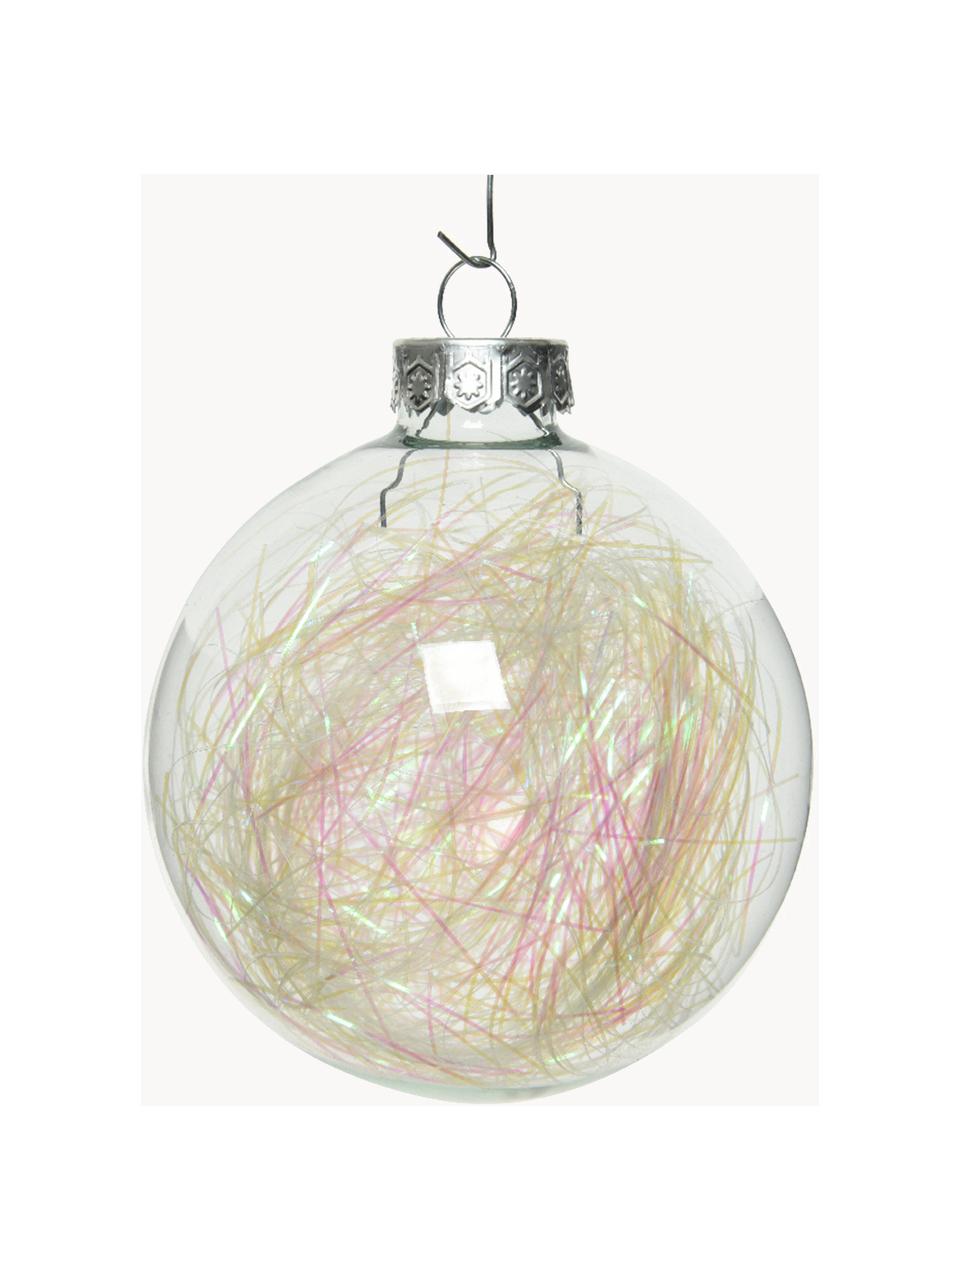 Kerstballen Tinsel, 4 stuks, Glas, Transparant, meerkleurig, Ø 7 cm